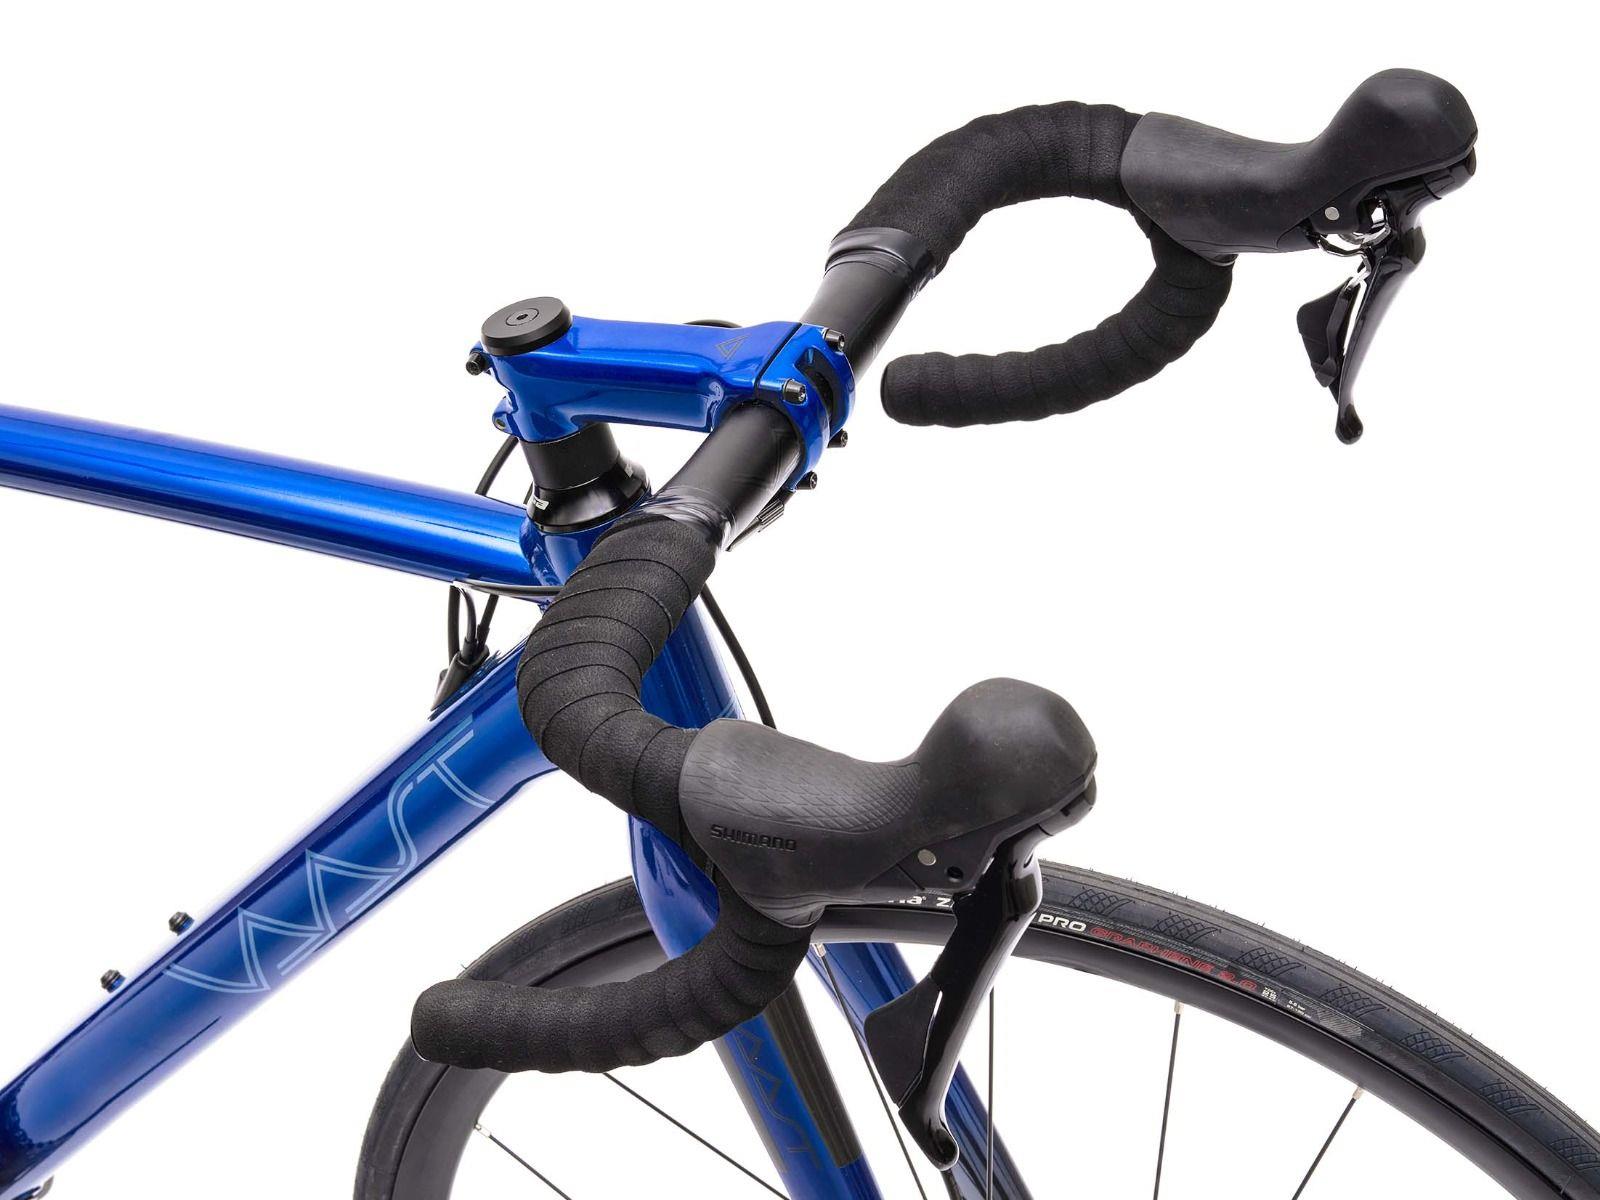 Vaast R/1 700C 105 Велосипед, синий, 58 см